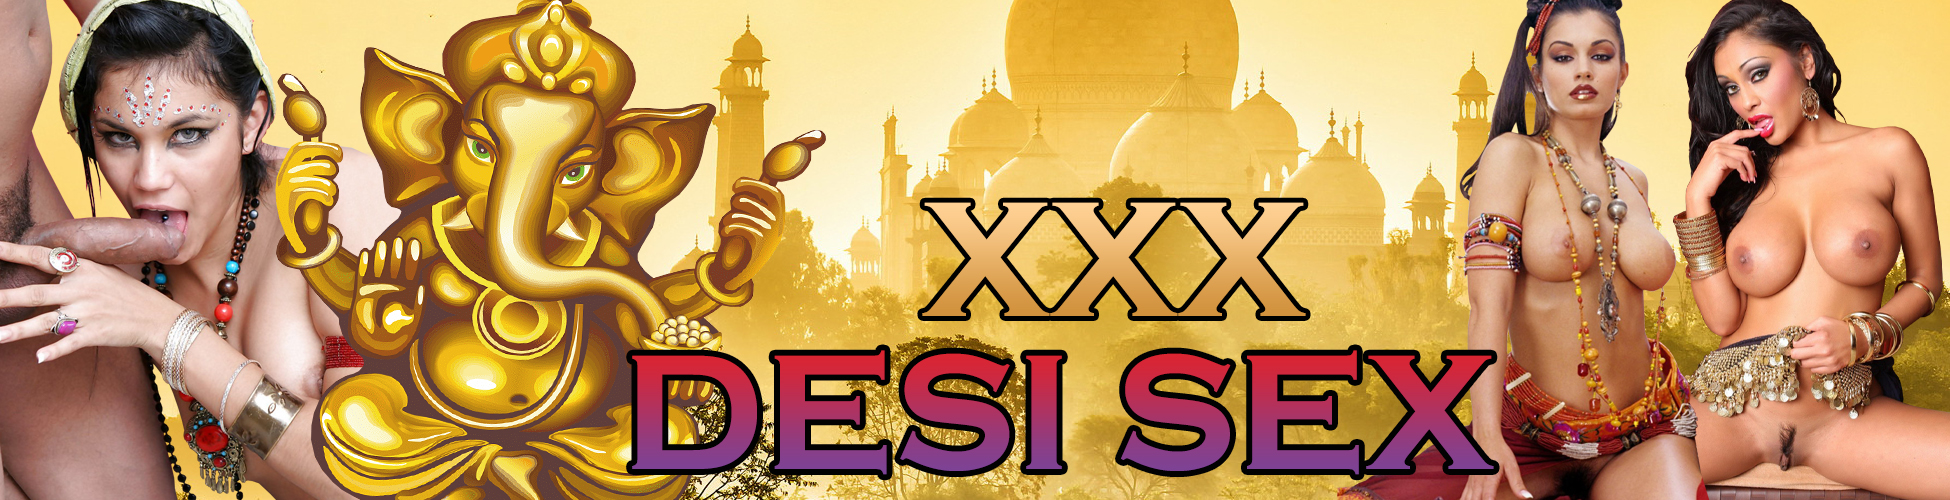 Xxxx Desi Hot Full Hd - XXX Desi Sex â¤ï¸ï¸ Hot HD Hindi Porn